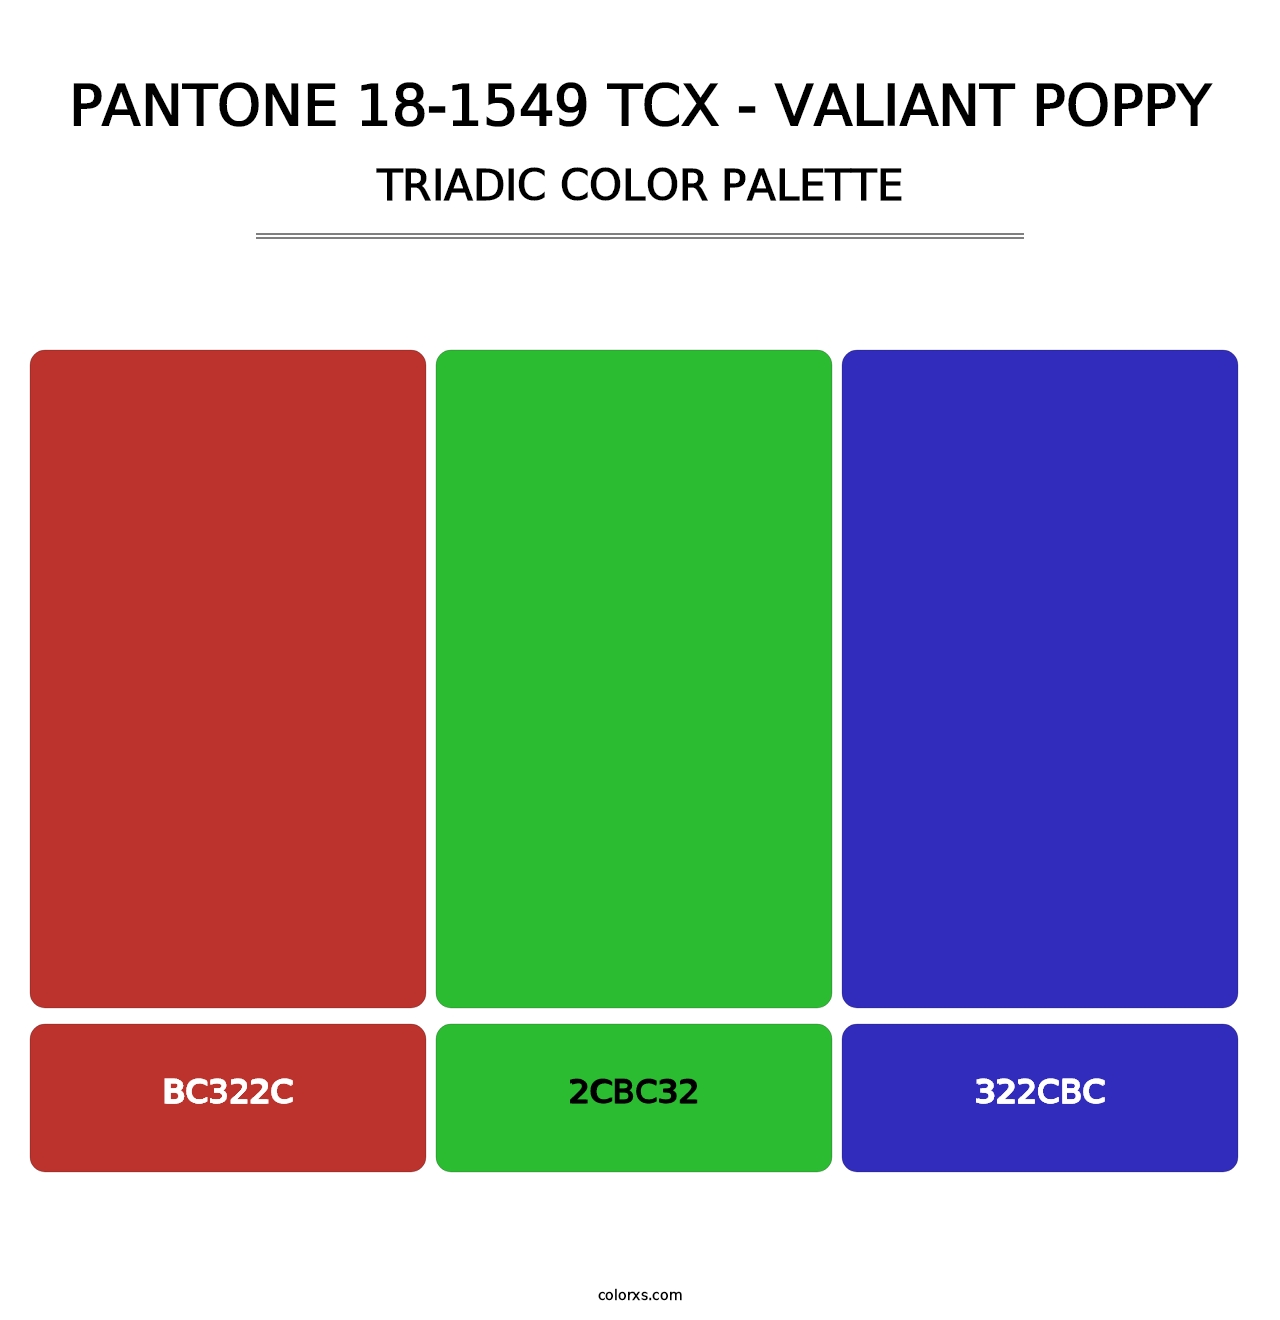 PANTONE 18-1549 TCX - Valiant Poppy - Triadic Color Palette